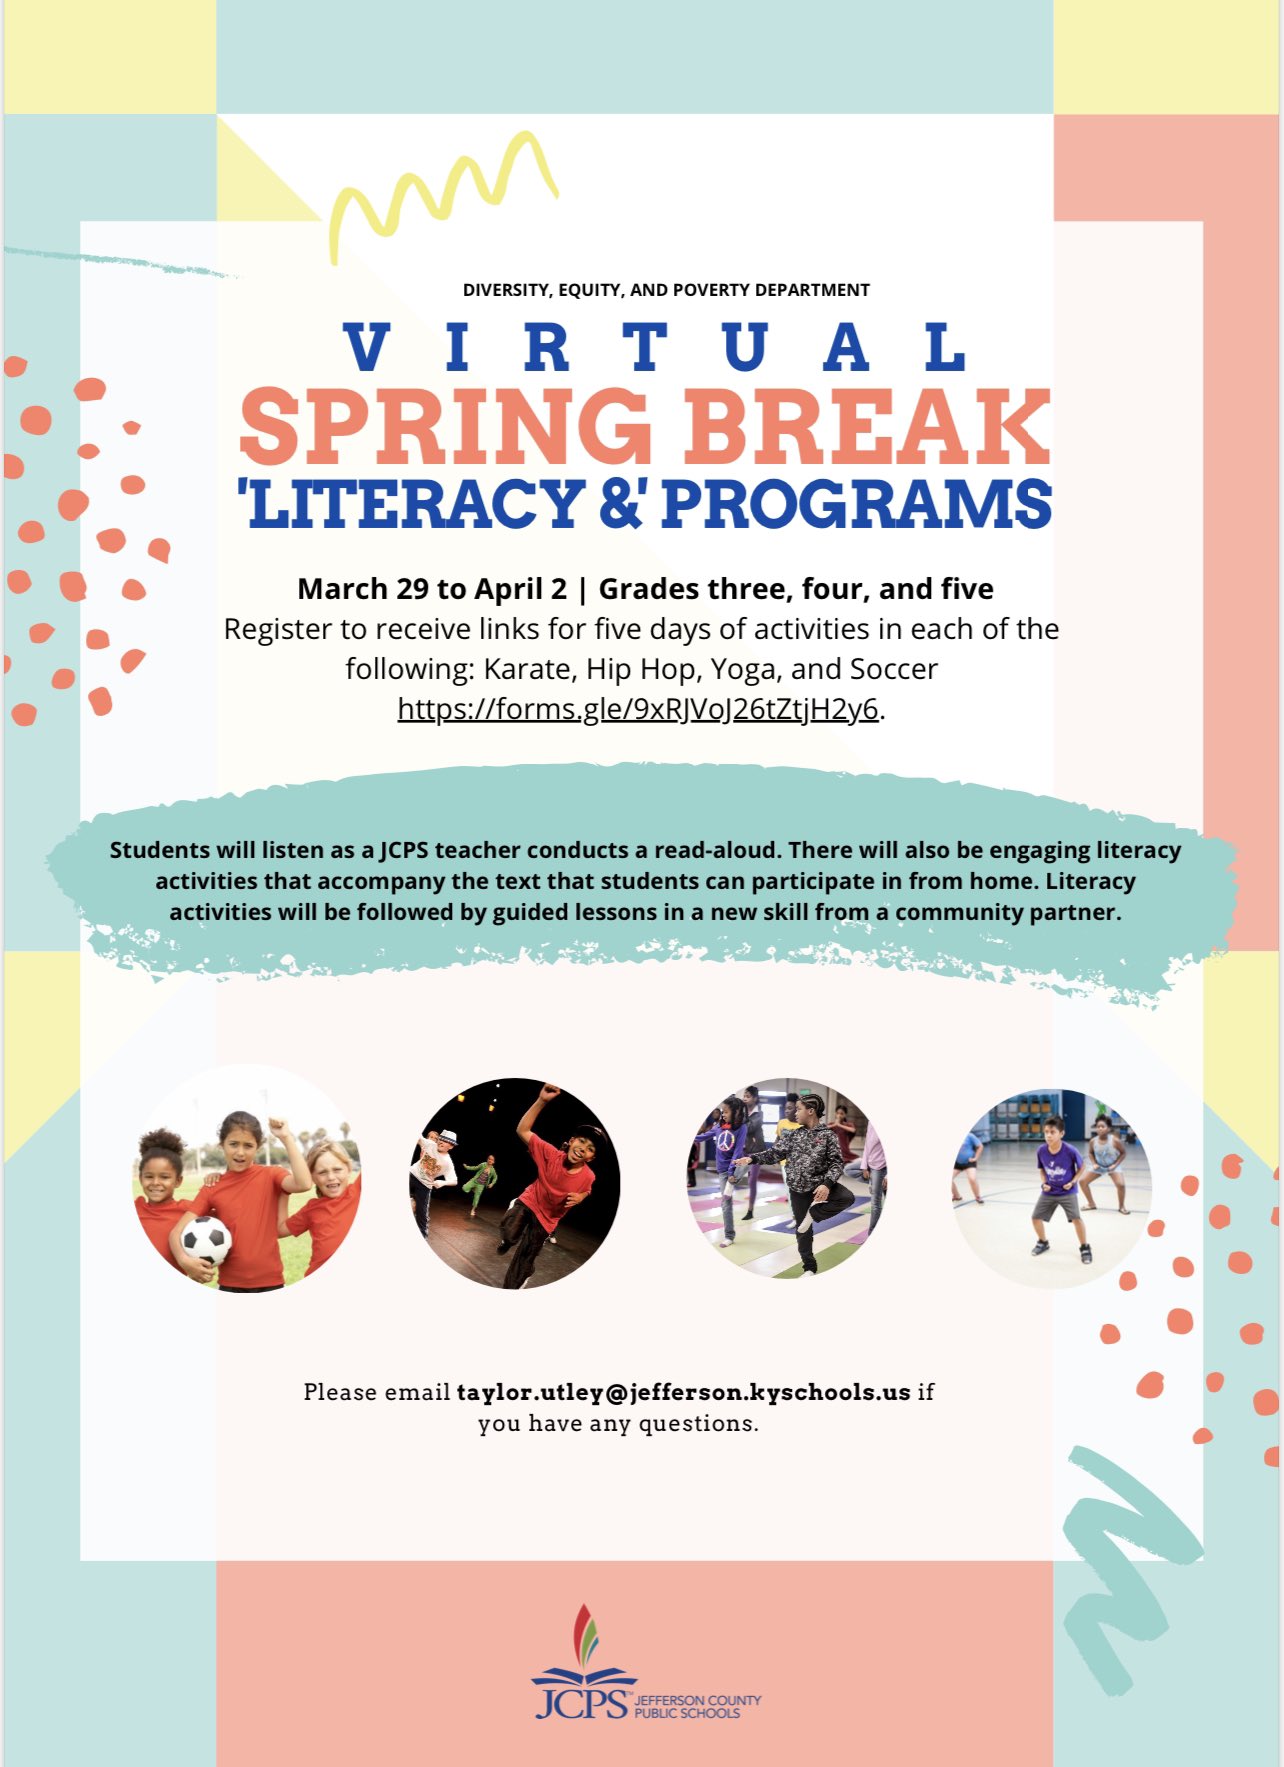 Spring Break ‘Literacy &’ Programs JCPS Diversity, Equity, and